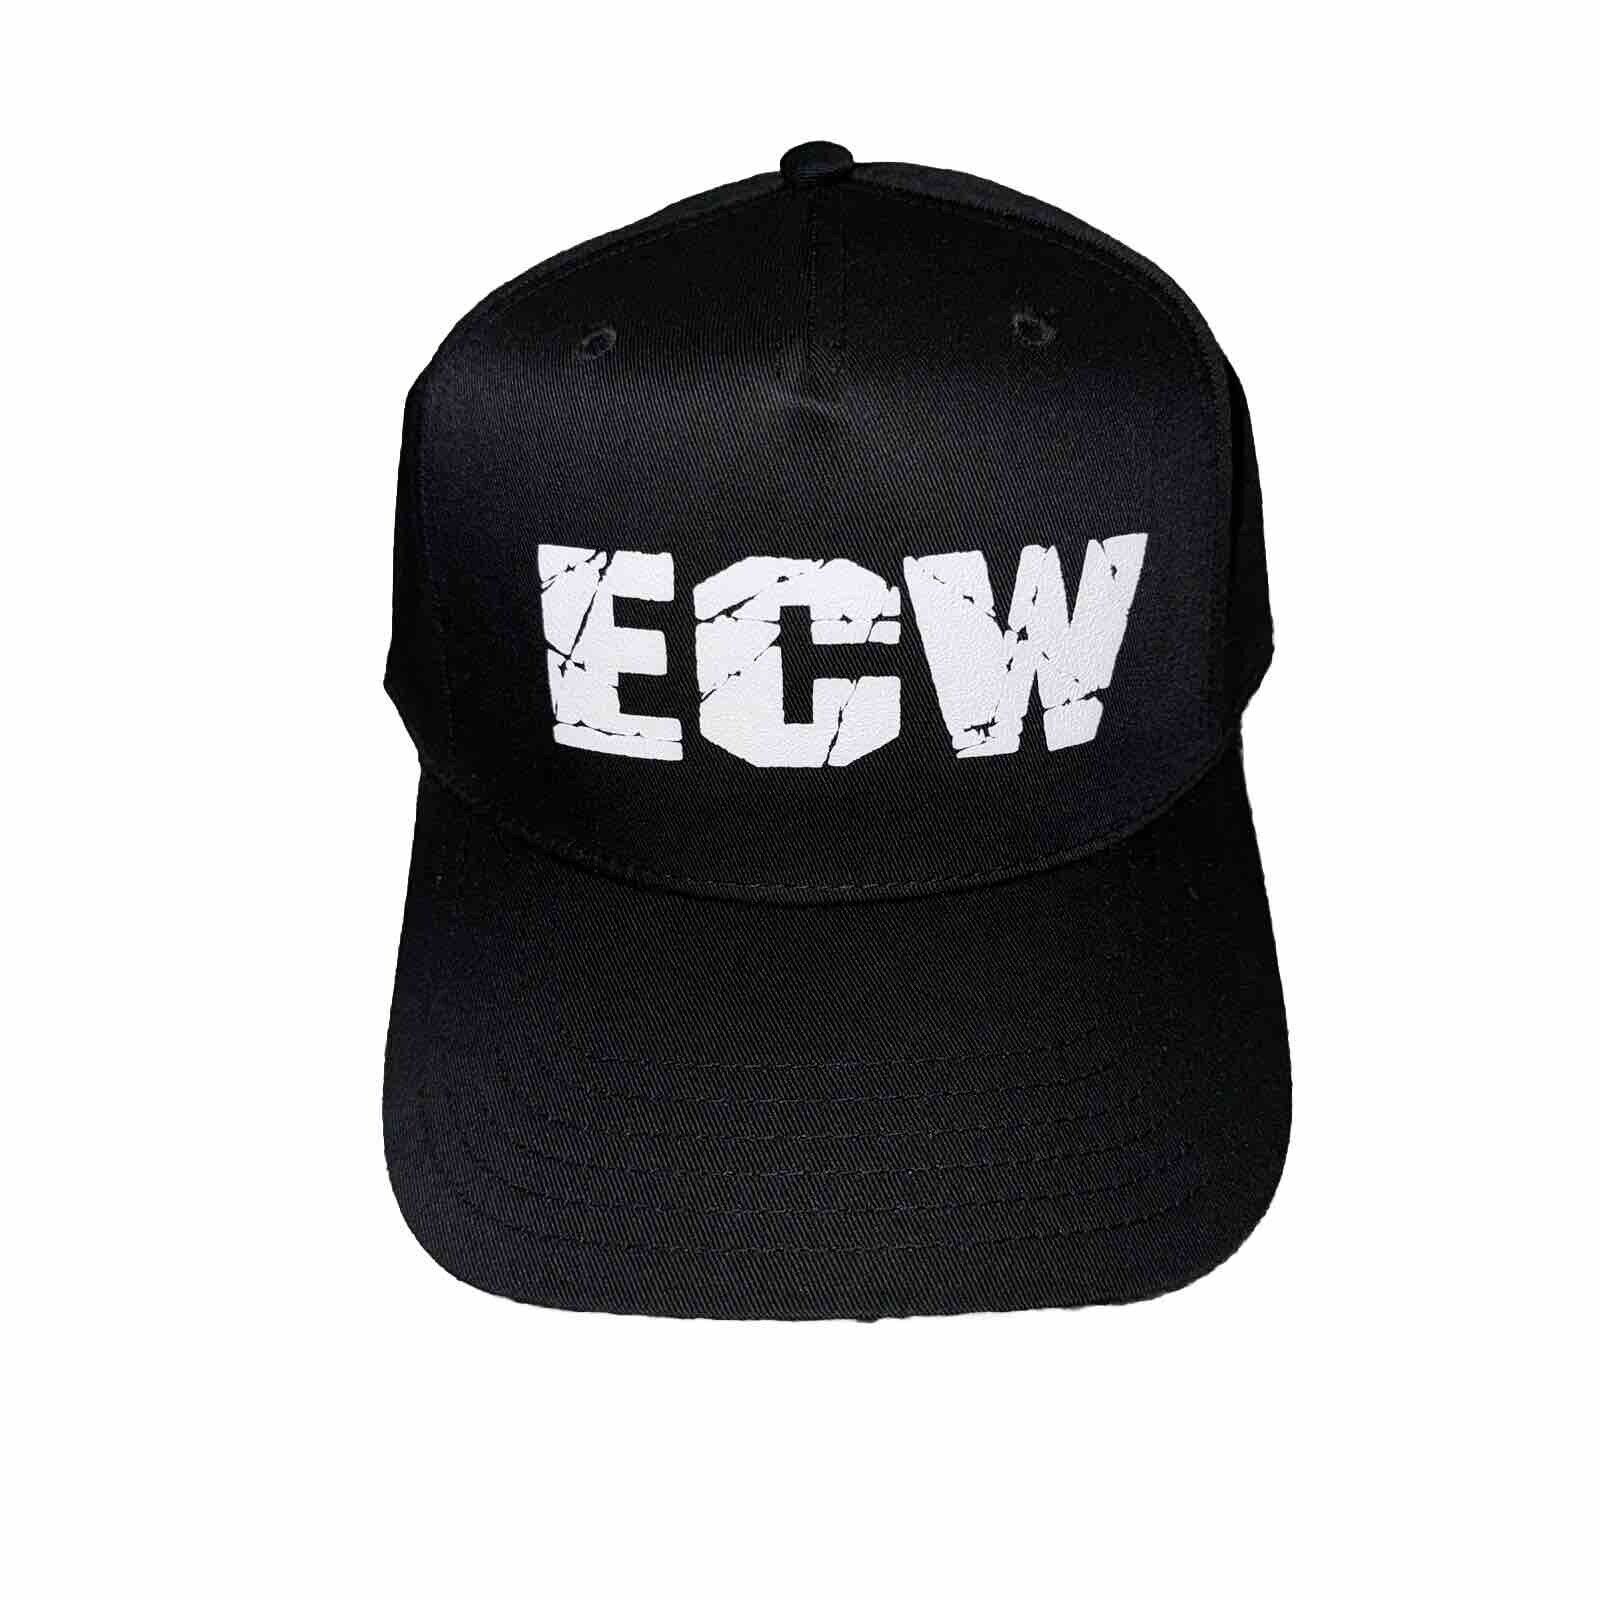 NEW ECW Extreme Championship Wrestling WWF Retro Vintage Custom Snapback Cap Hat